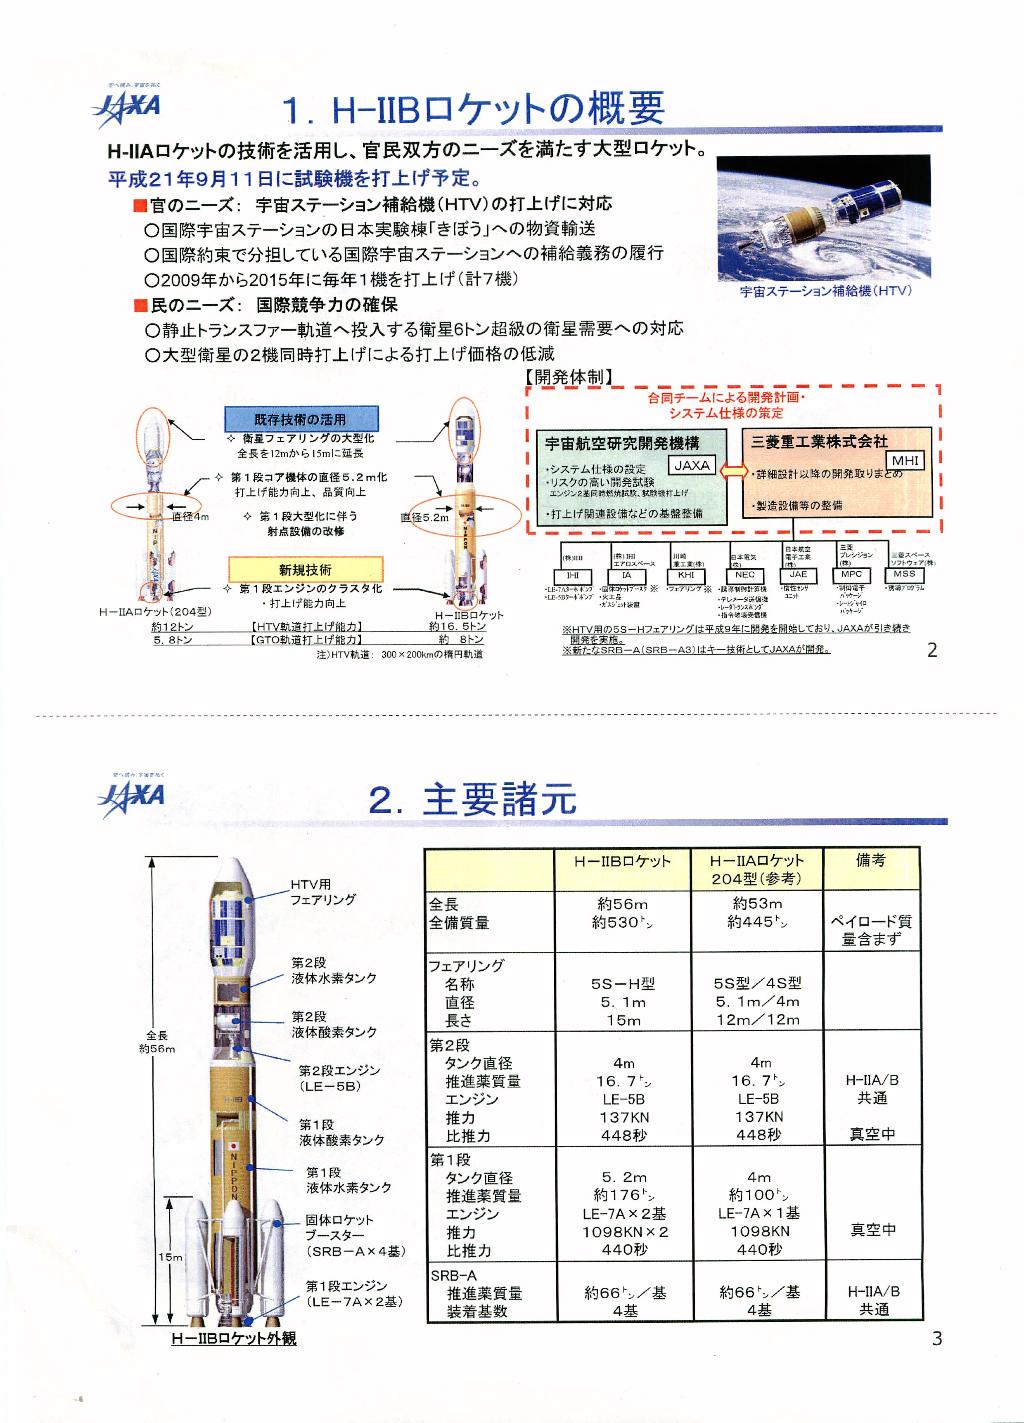 H-IIBロケットの概要。当日JAXAが配布した資料より